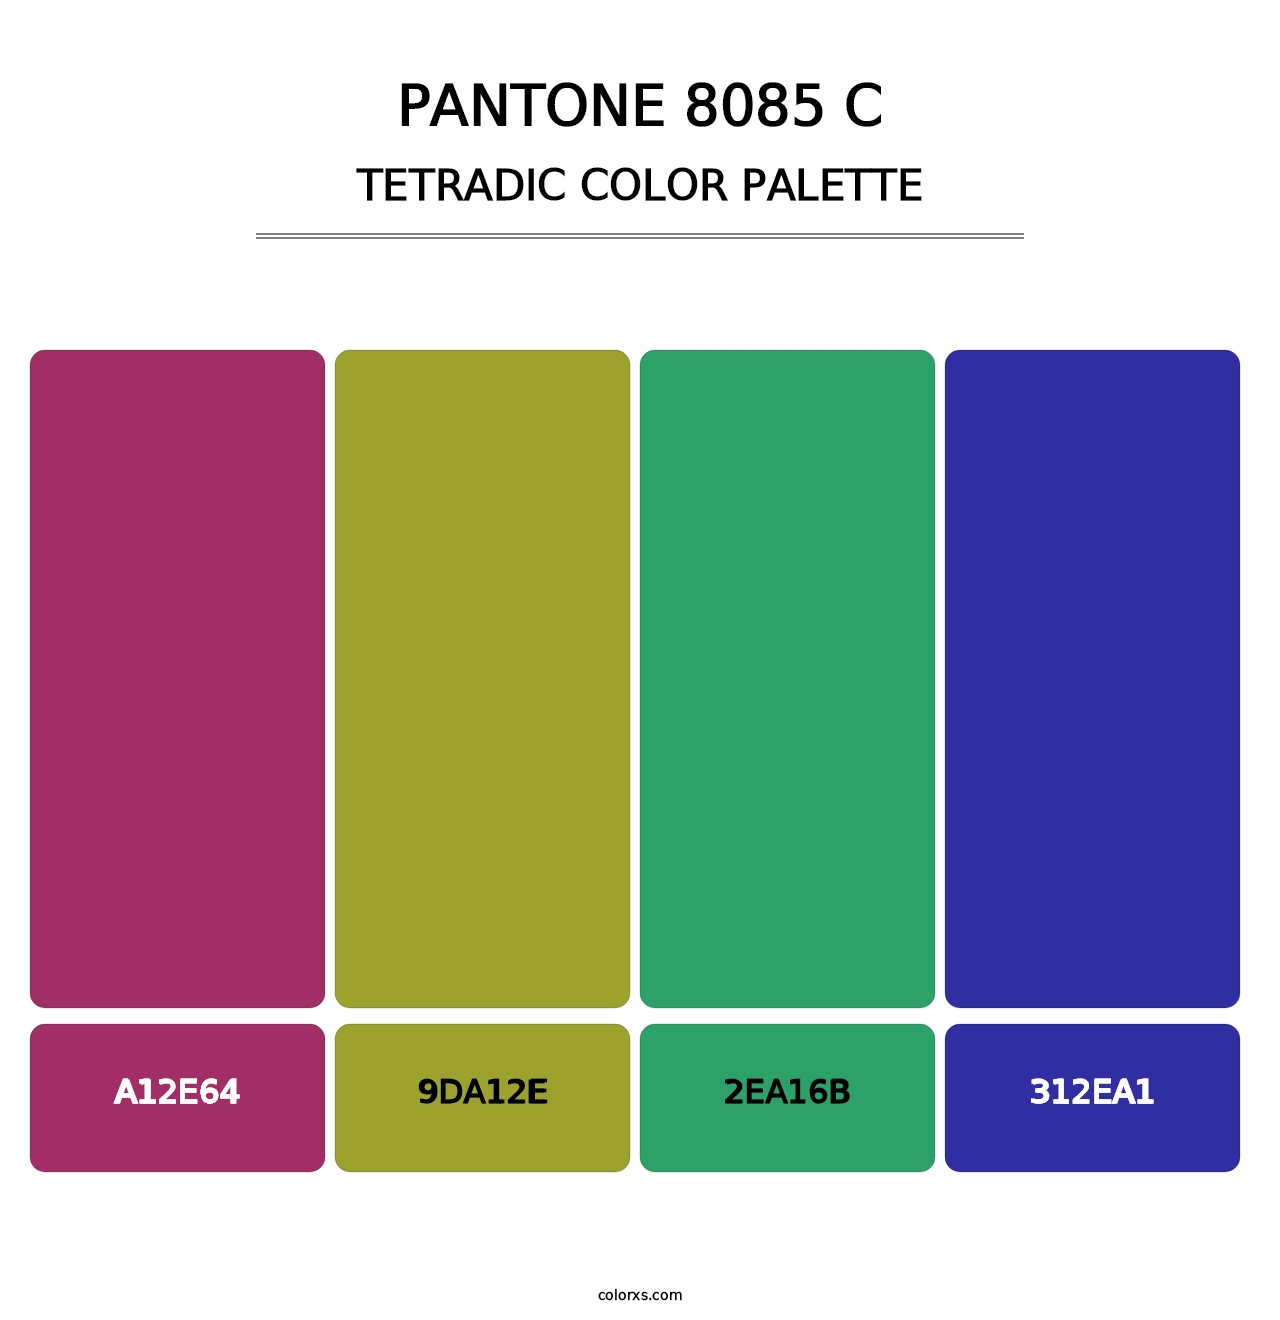 PANTONE 8085 C - Tetradic Color Palette